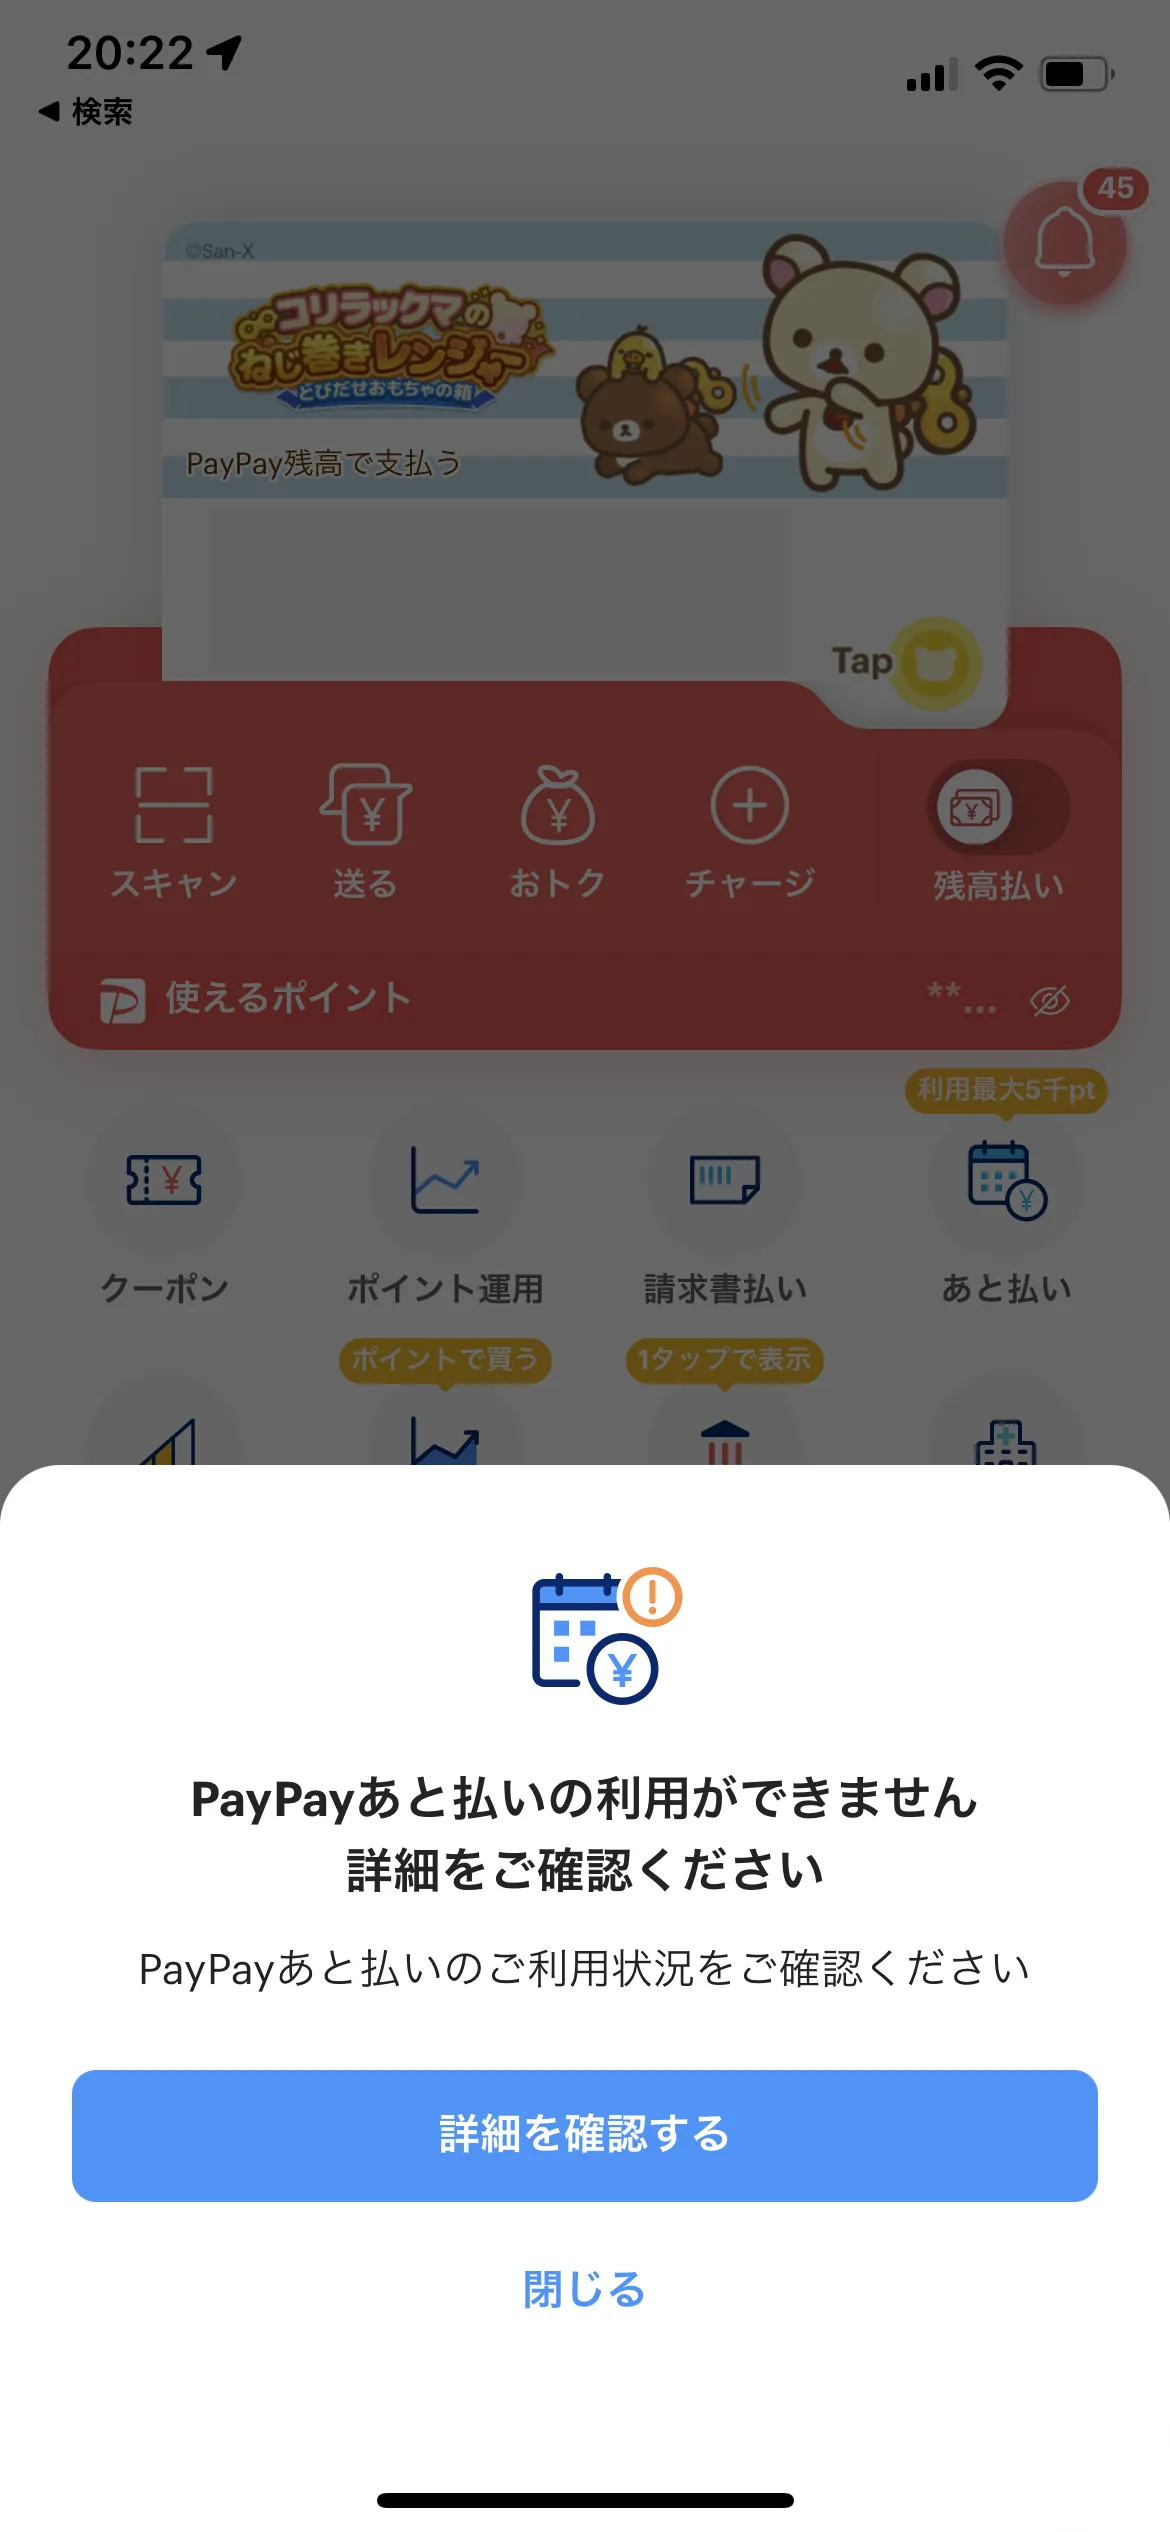 PayPay ホーム screen